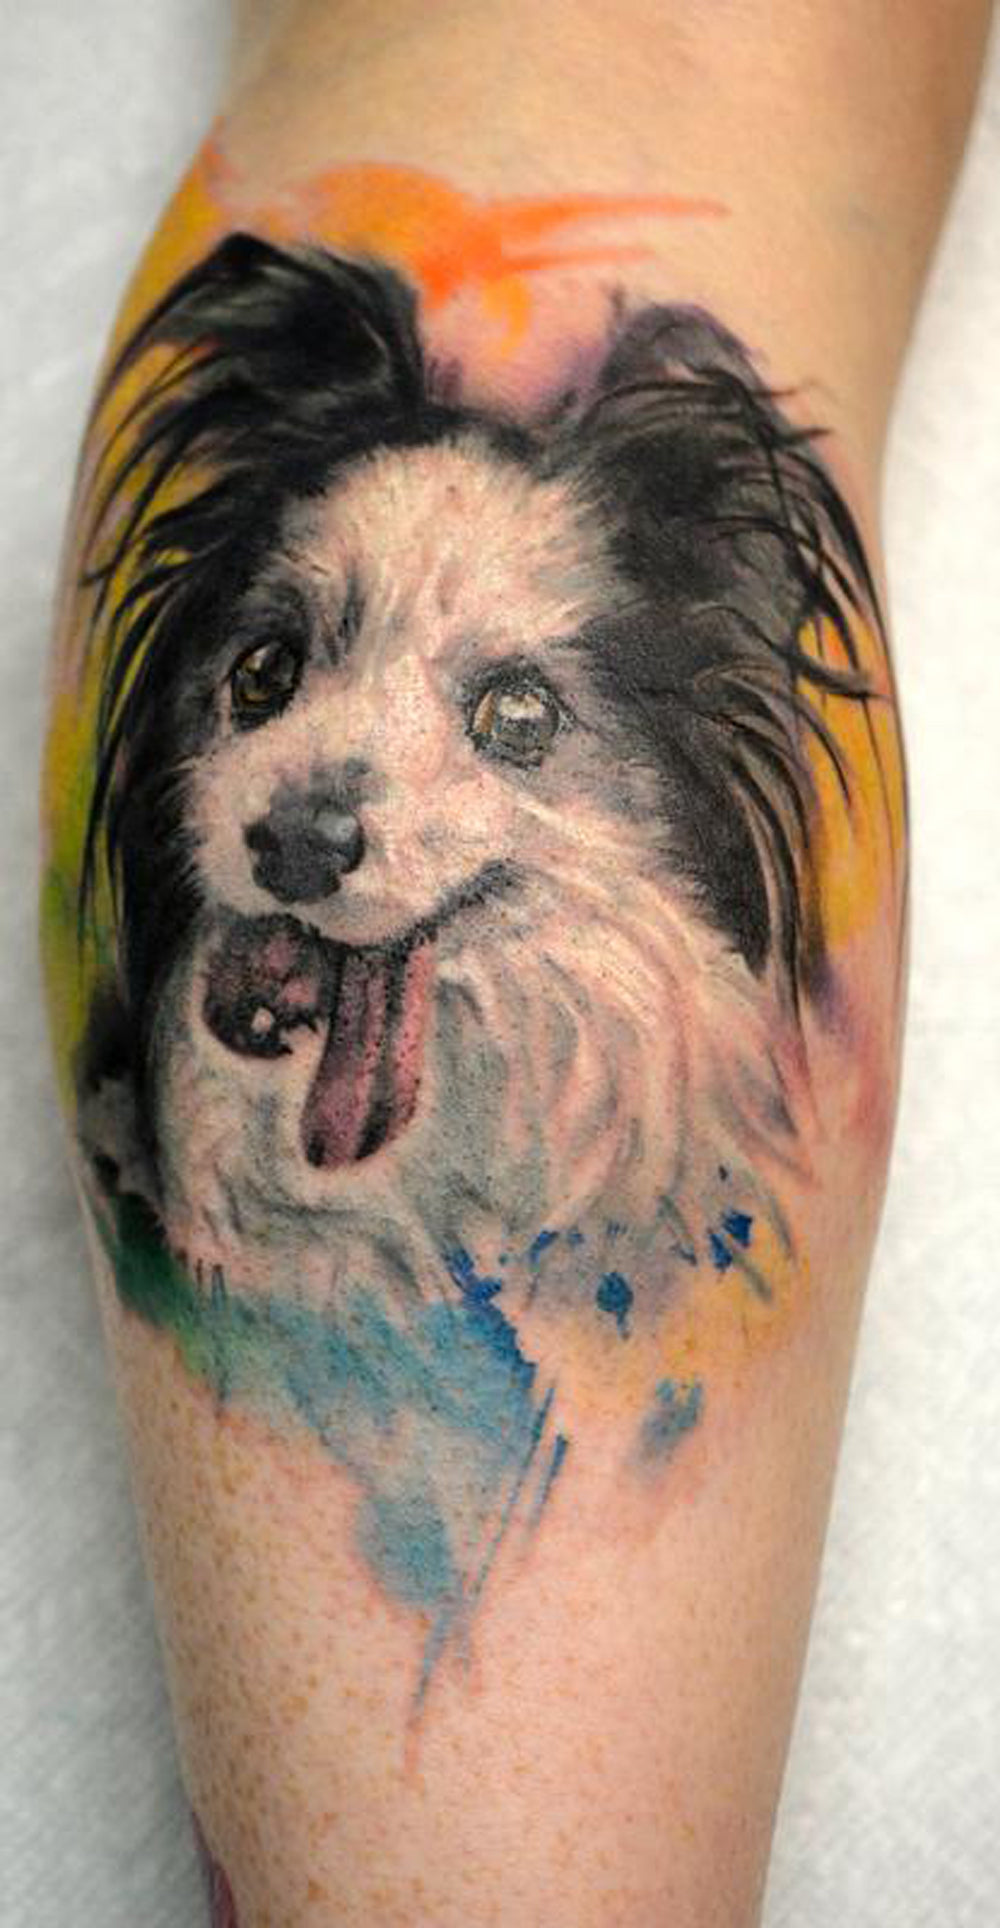 Realistic Watercolor Dog Arm Sleeve Tattoo Ideas -  Ideas de tatuaje de manga de brazo de perro de acuarela - www.MyBodiArt.com